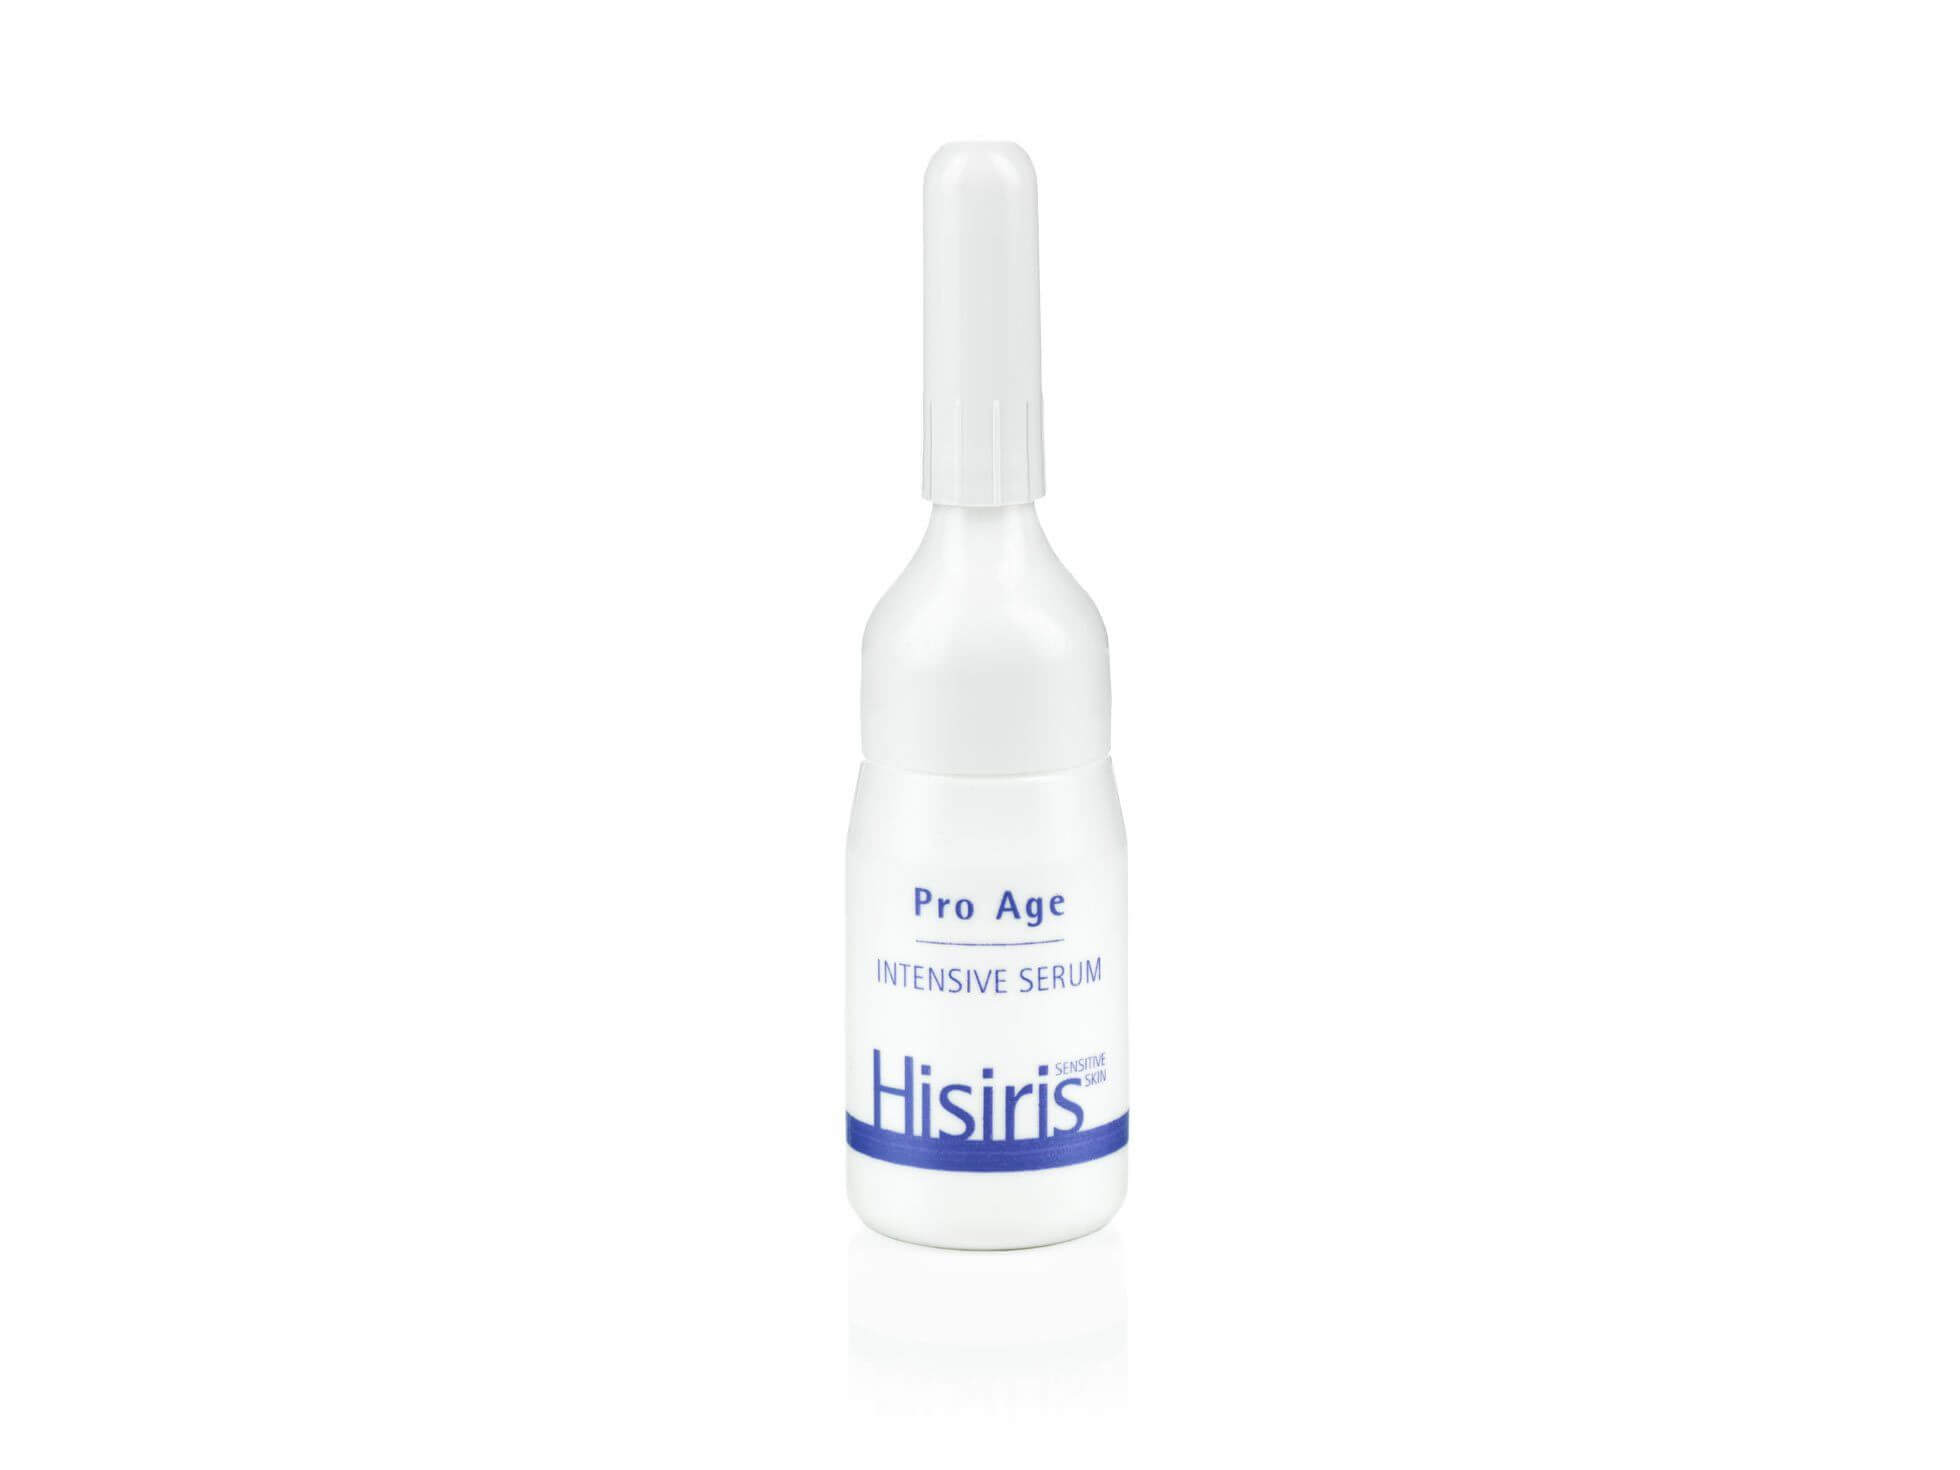 Histomer Hisiris Pro Age Intensive Serum (6x 2.5ml) - Histomer Malta